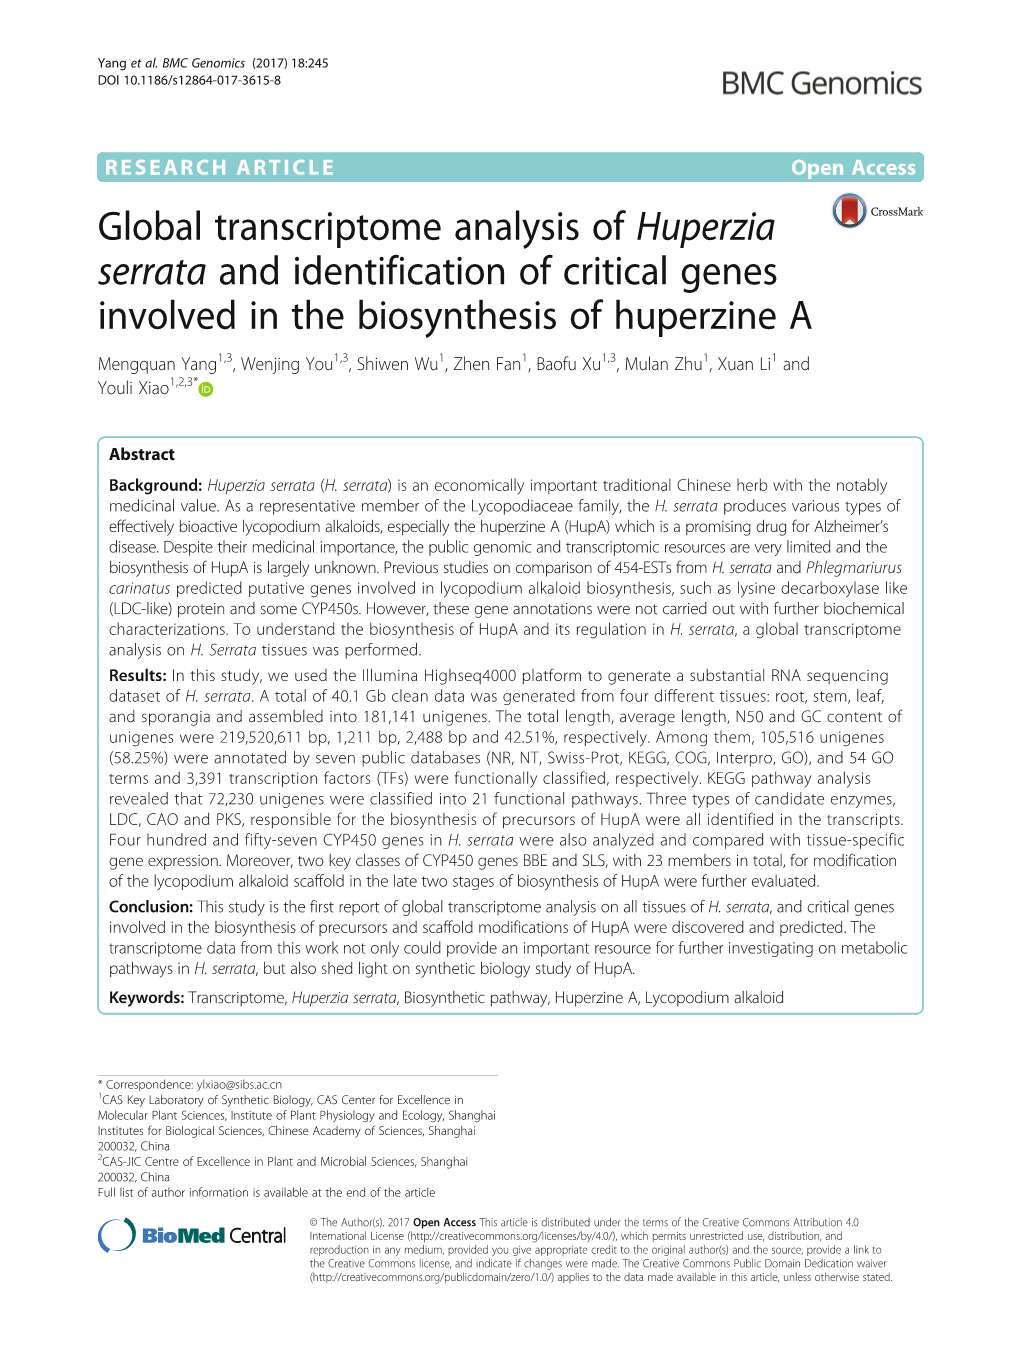 Global Transcriptome Analysis of Huperzia Serrata and Identification